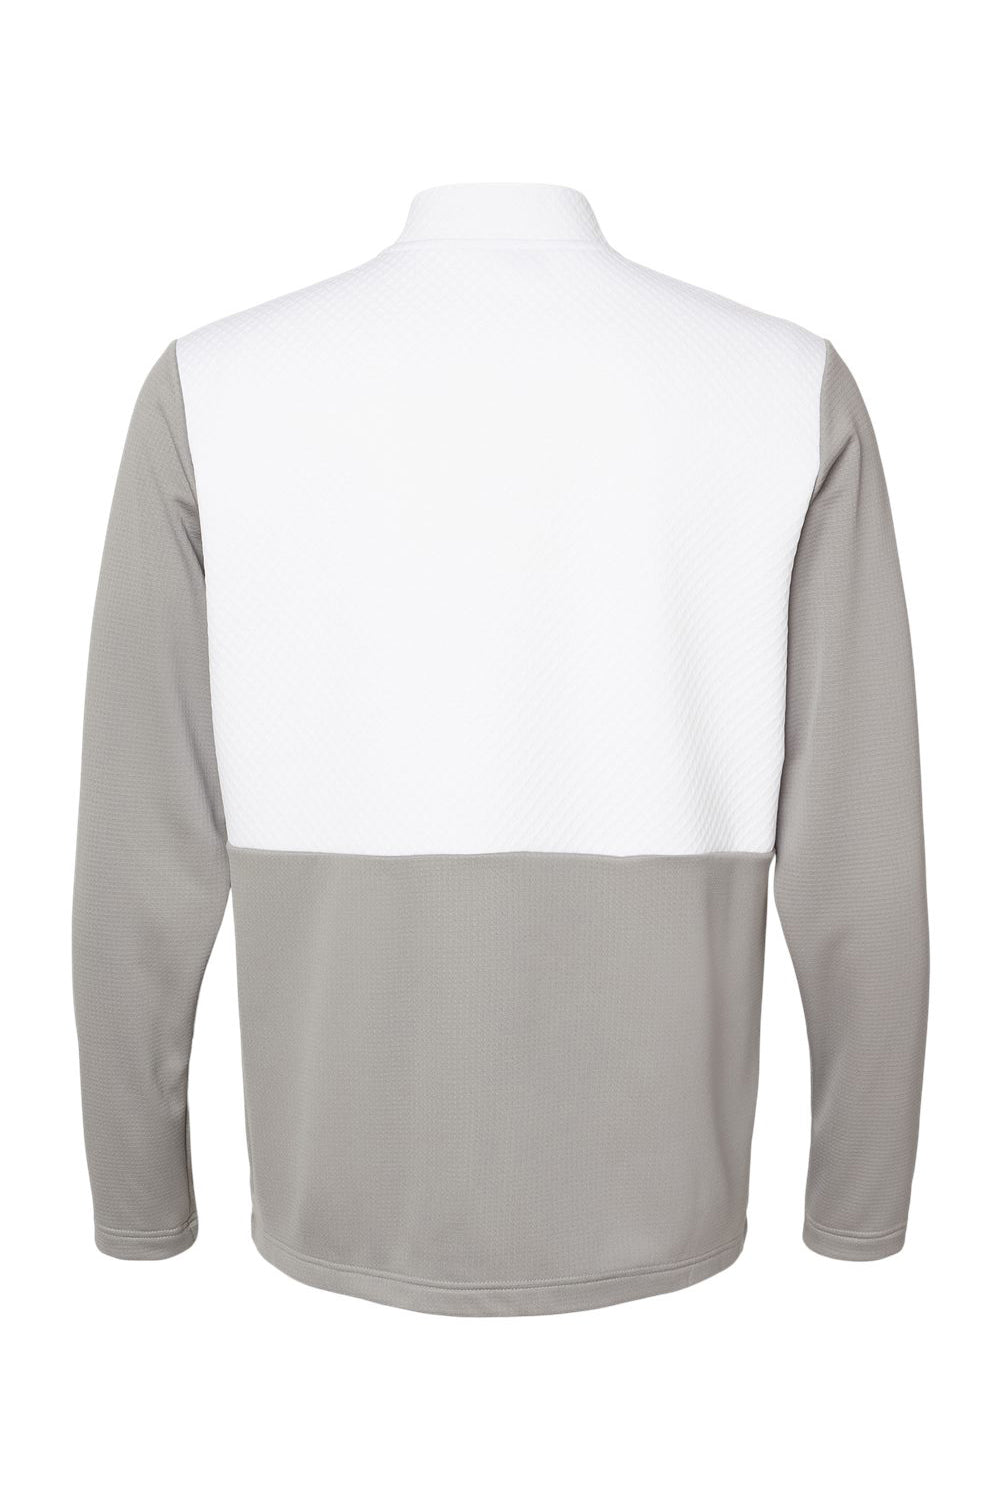 Adidas A532 Mens Textured Mixed Media 1/4 Zip Sweatshirt Grey/White Flat Back